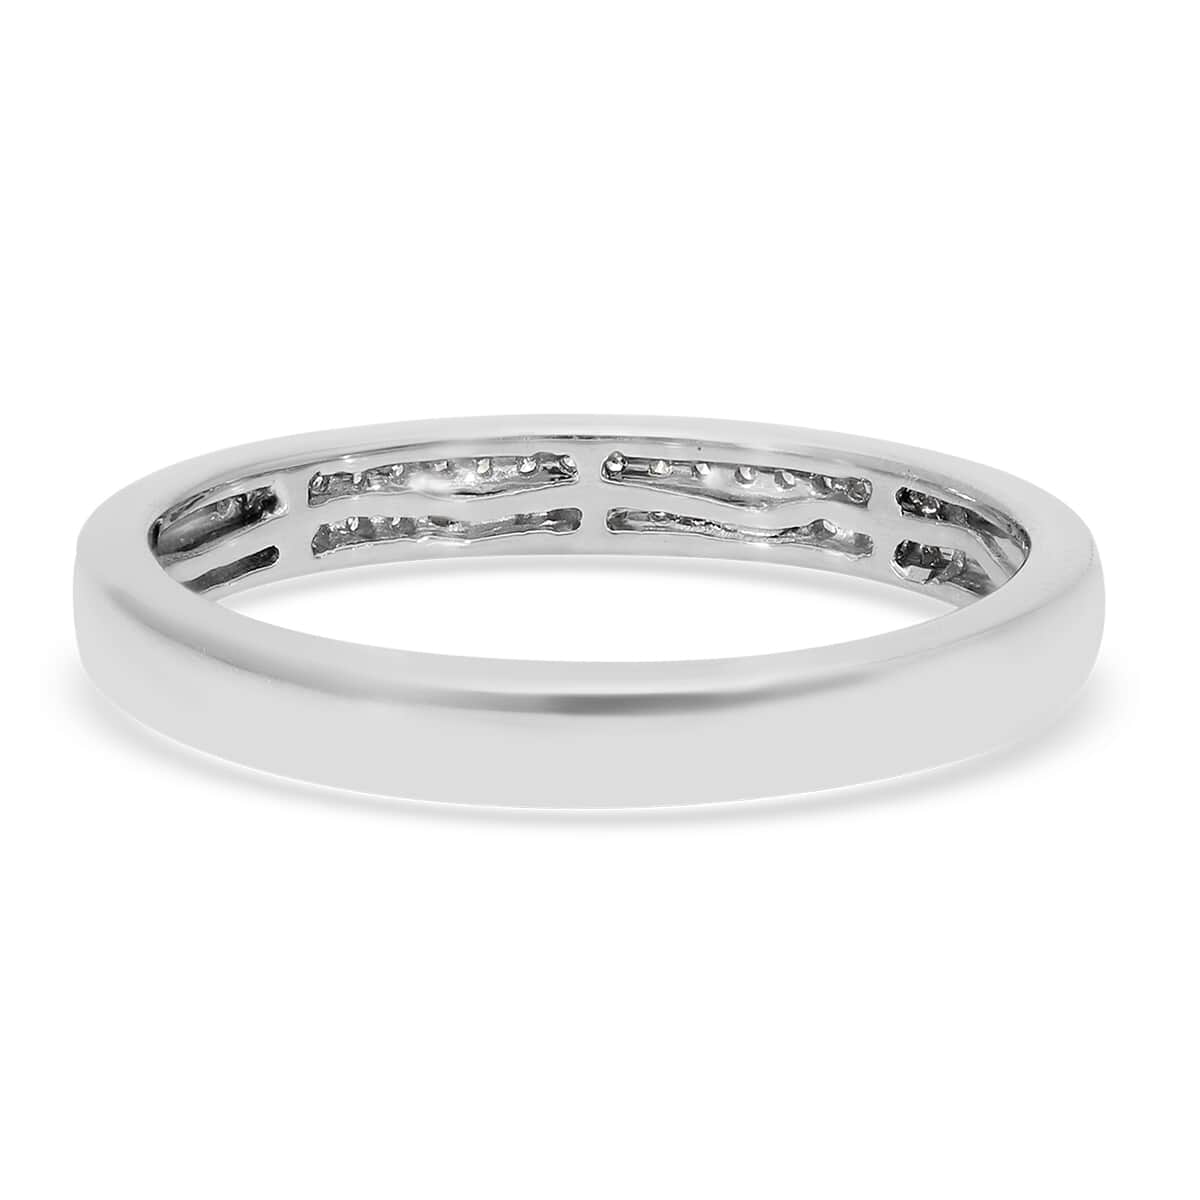 RHAPSODY IGI Certified 950 Platinum E-F VS Diamond Ring (Size 7.0) 5 Grams 0.18 ctw image number 4